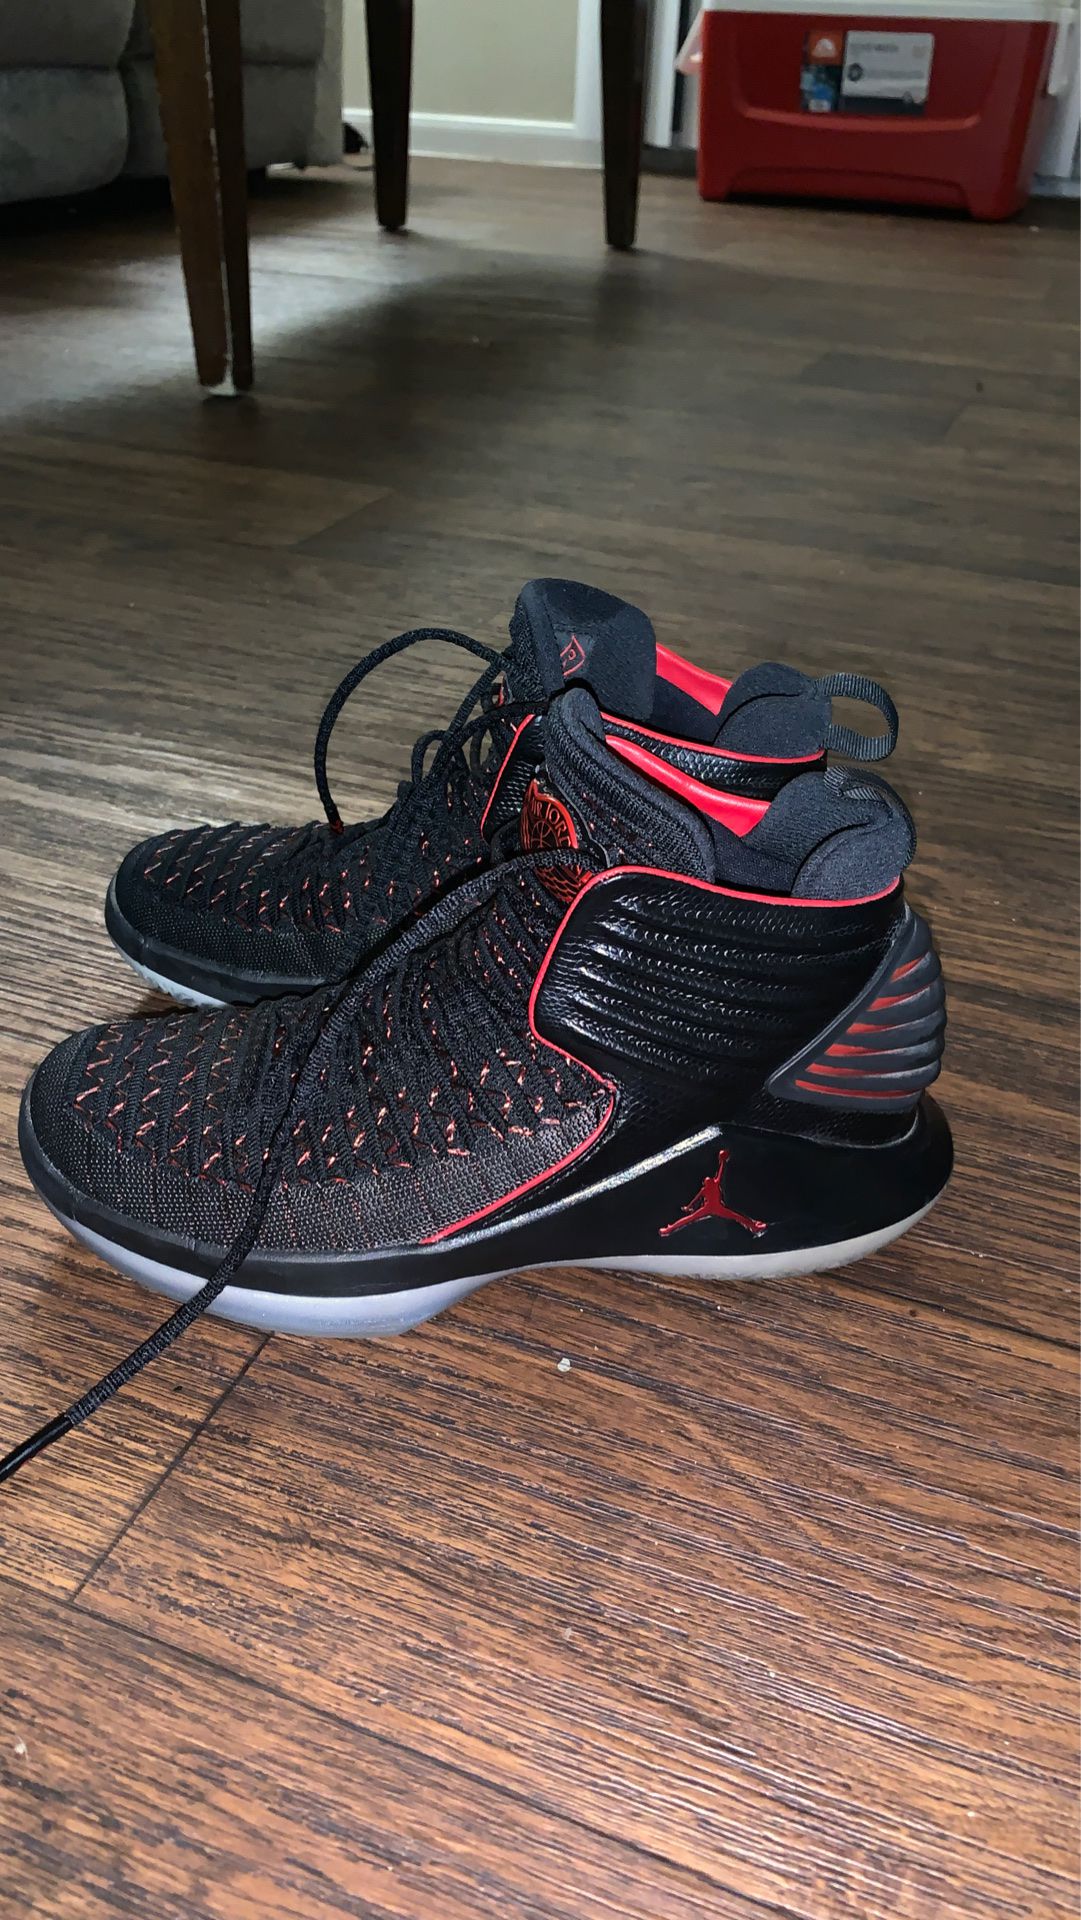 Nike Air Jordan 32 mj banned shoes black size 5